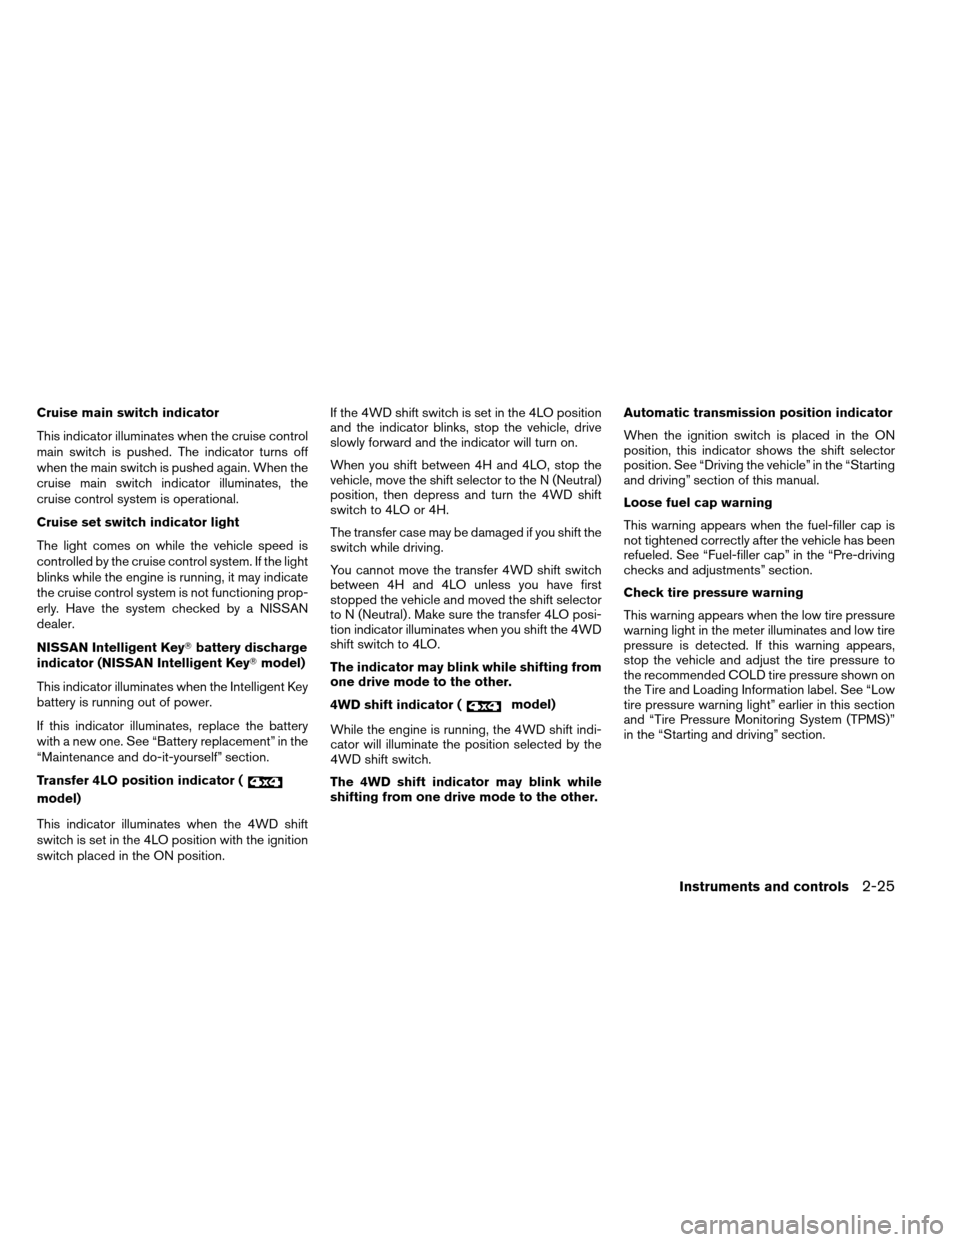 NISSAN ARMADA 2014 1.G Owners Manual Cruise main switch indicator
This indicator illuminates when the cruise control
main switch is pushed. The indicator turns off
when the main switch is pushed again. When the
cruise main switch indicat